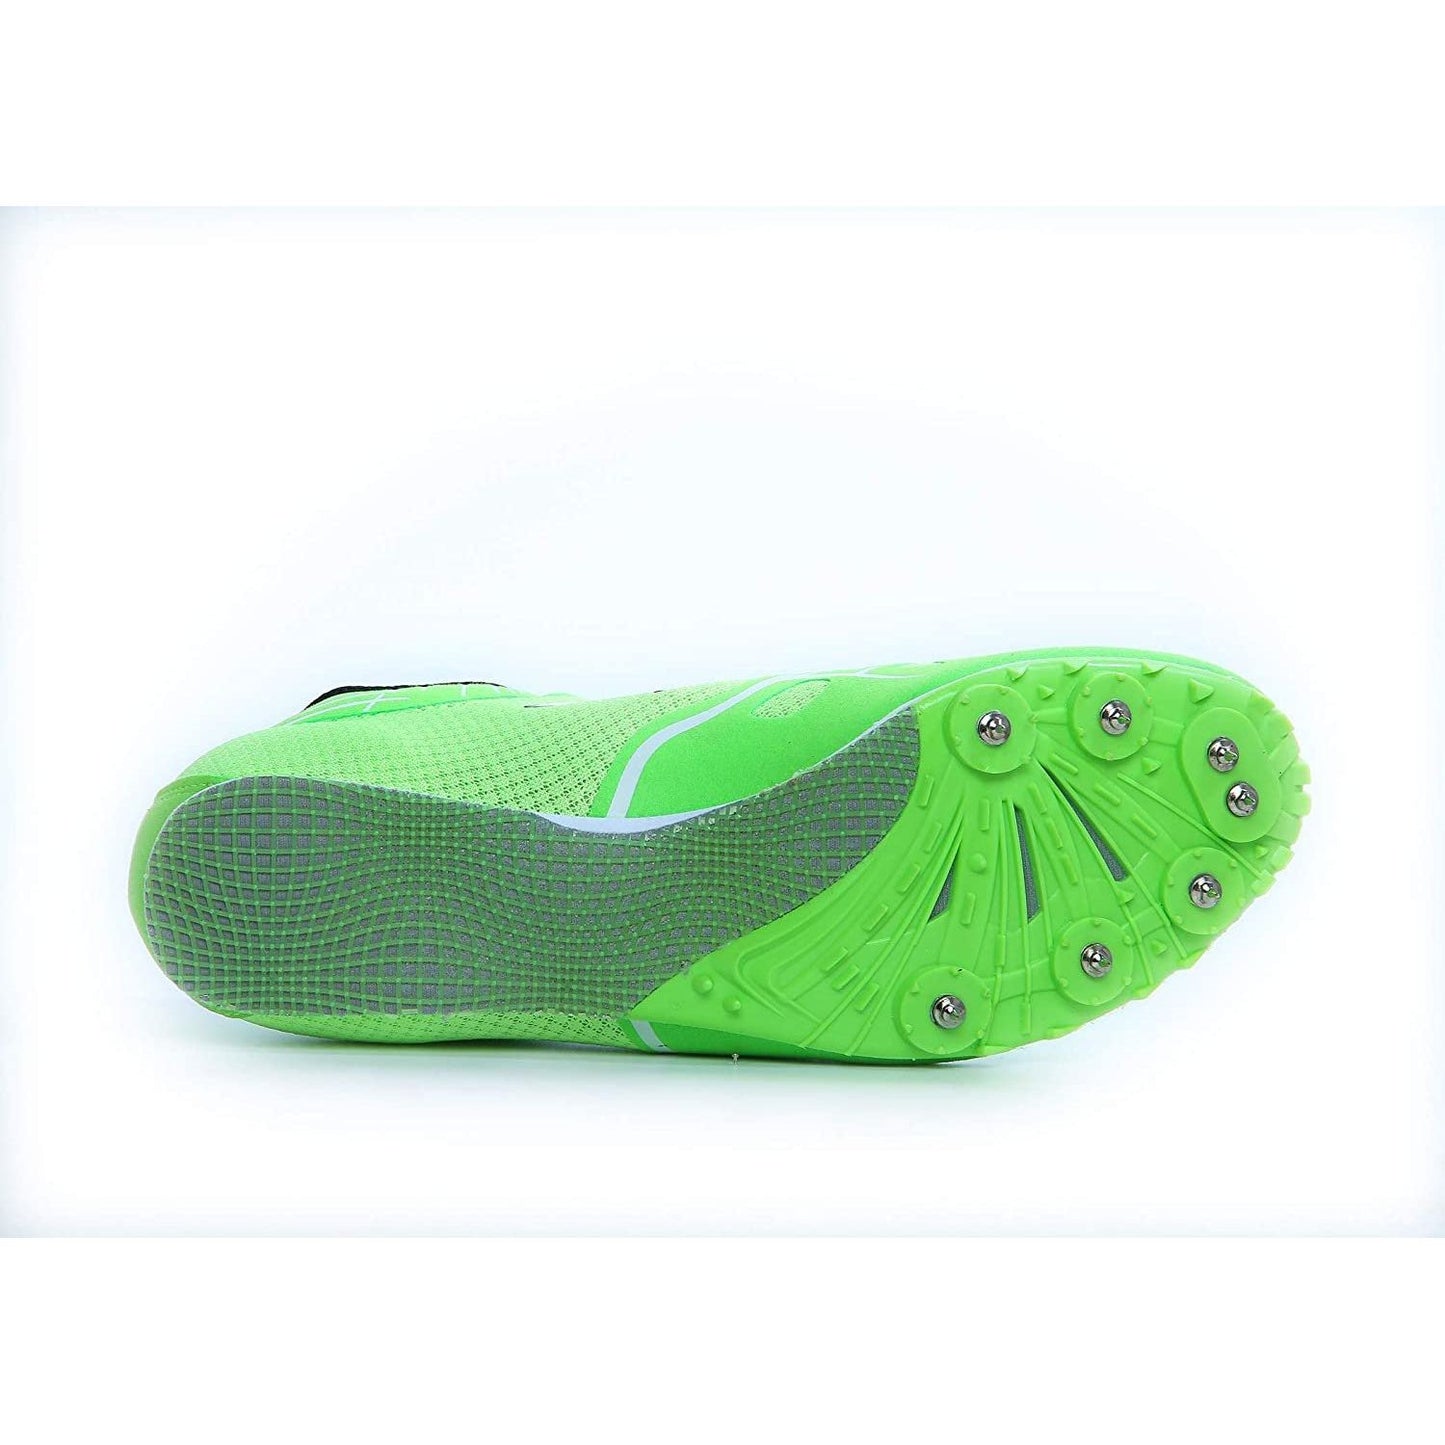 Health Long Jump Shoe (Green) - ATEONLINESHOP